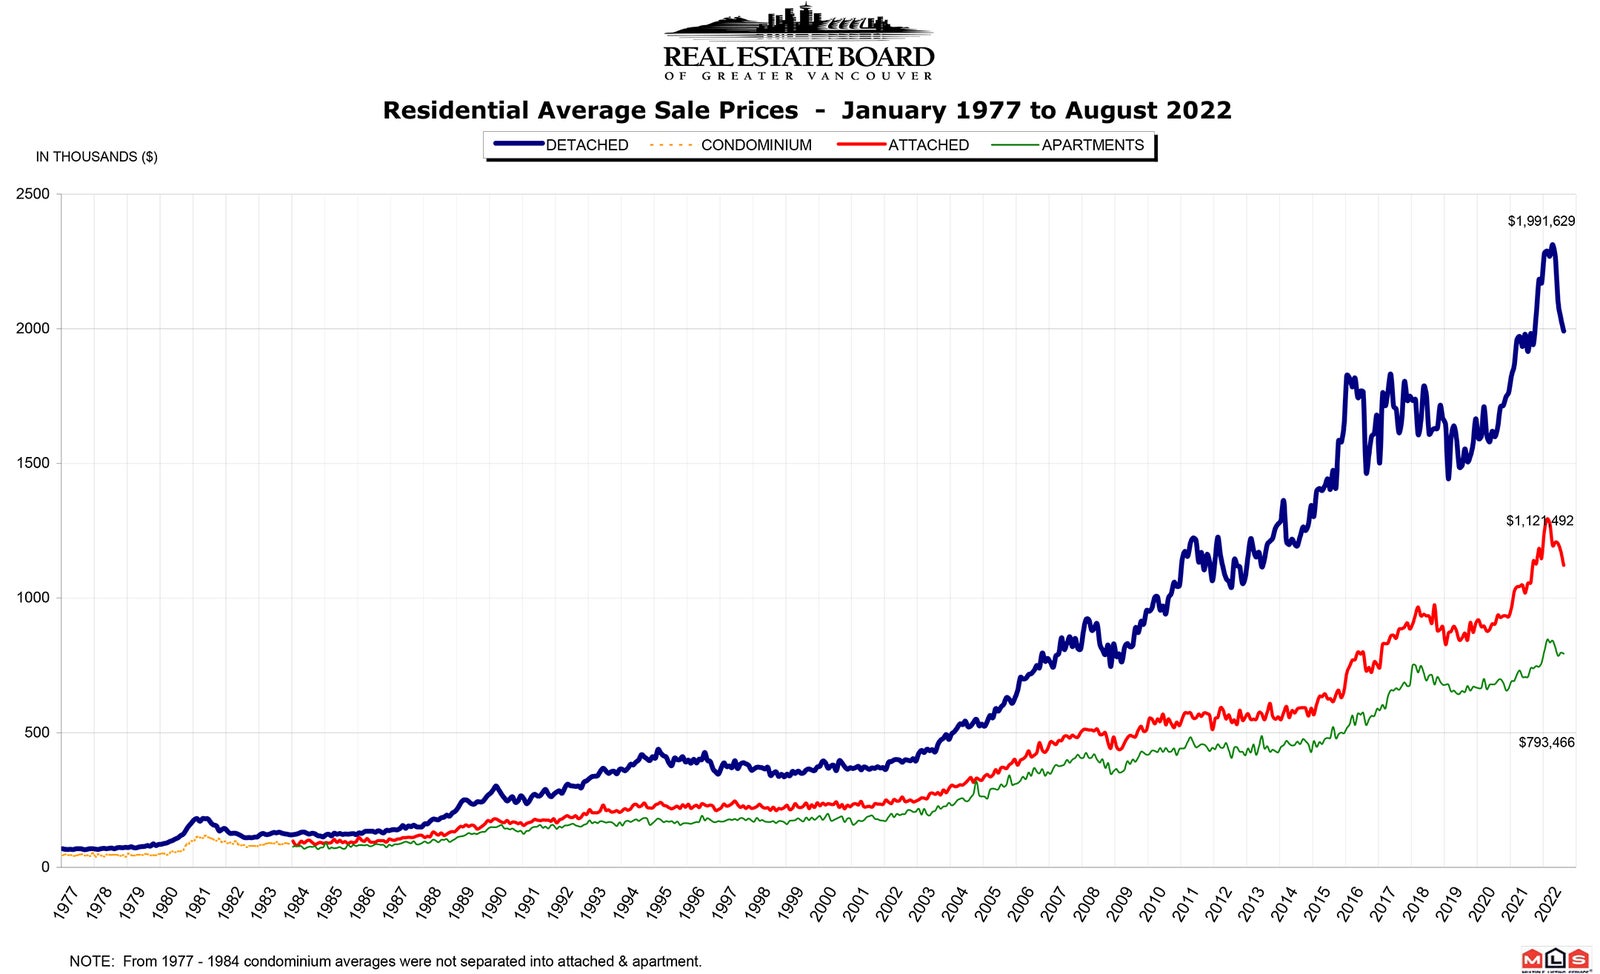 Residential Average Sale Price RASP August 2022 Chris Frederickson Real Estate Vancouver